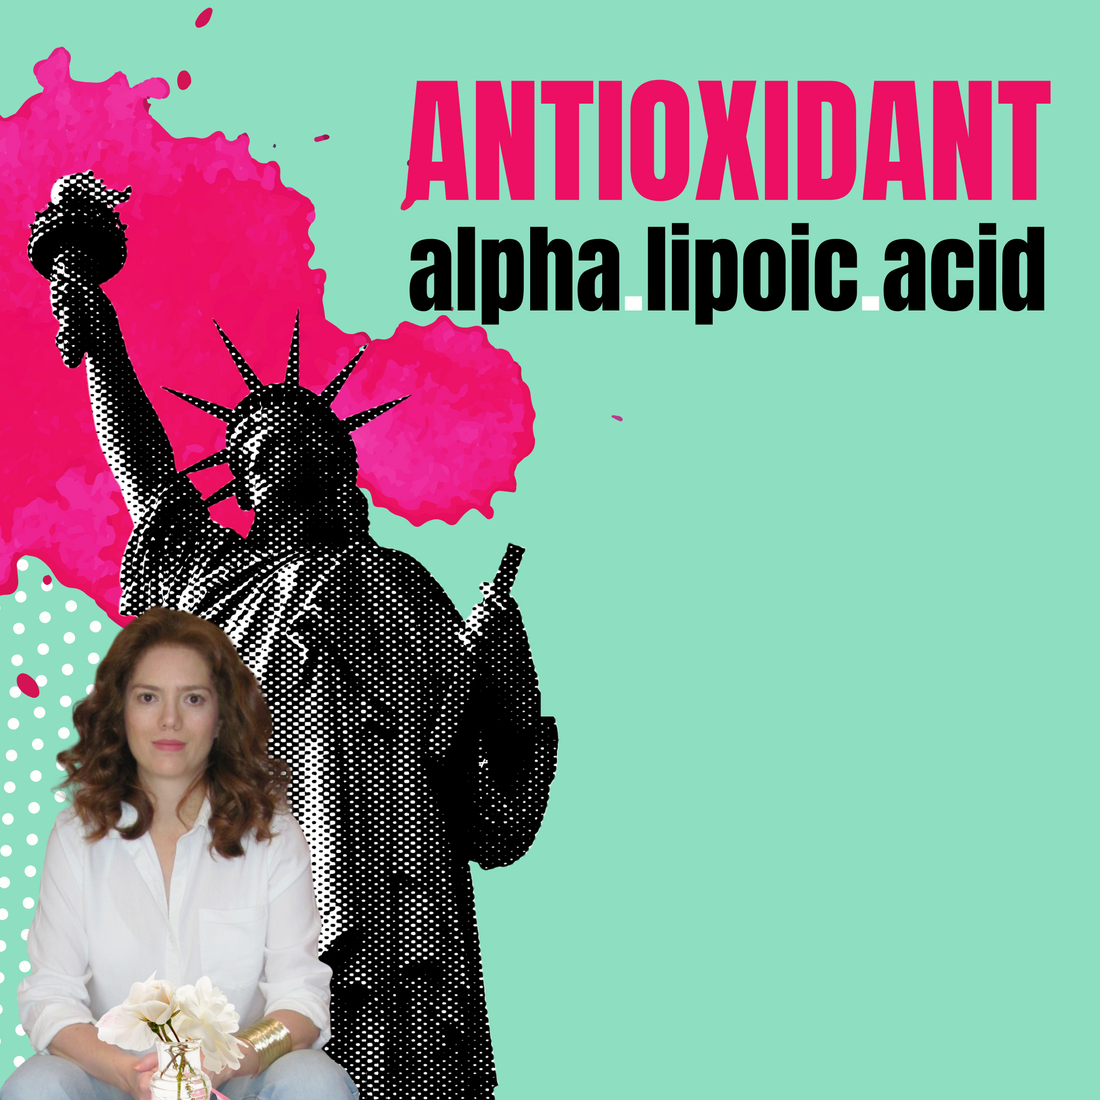 Alpha lipoic acid antioxidant skin benefits